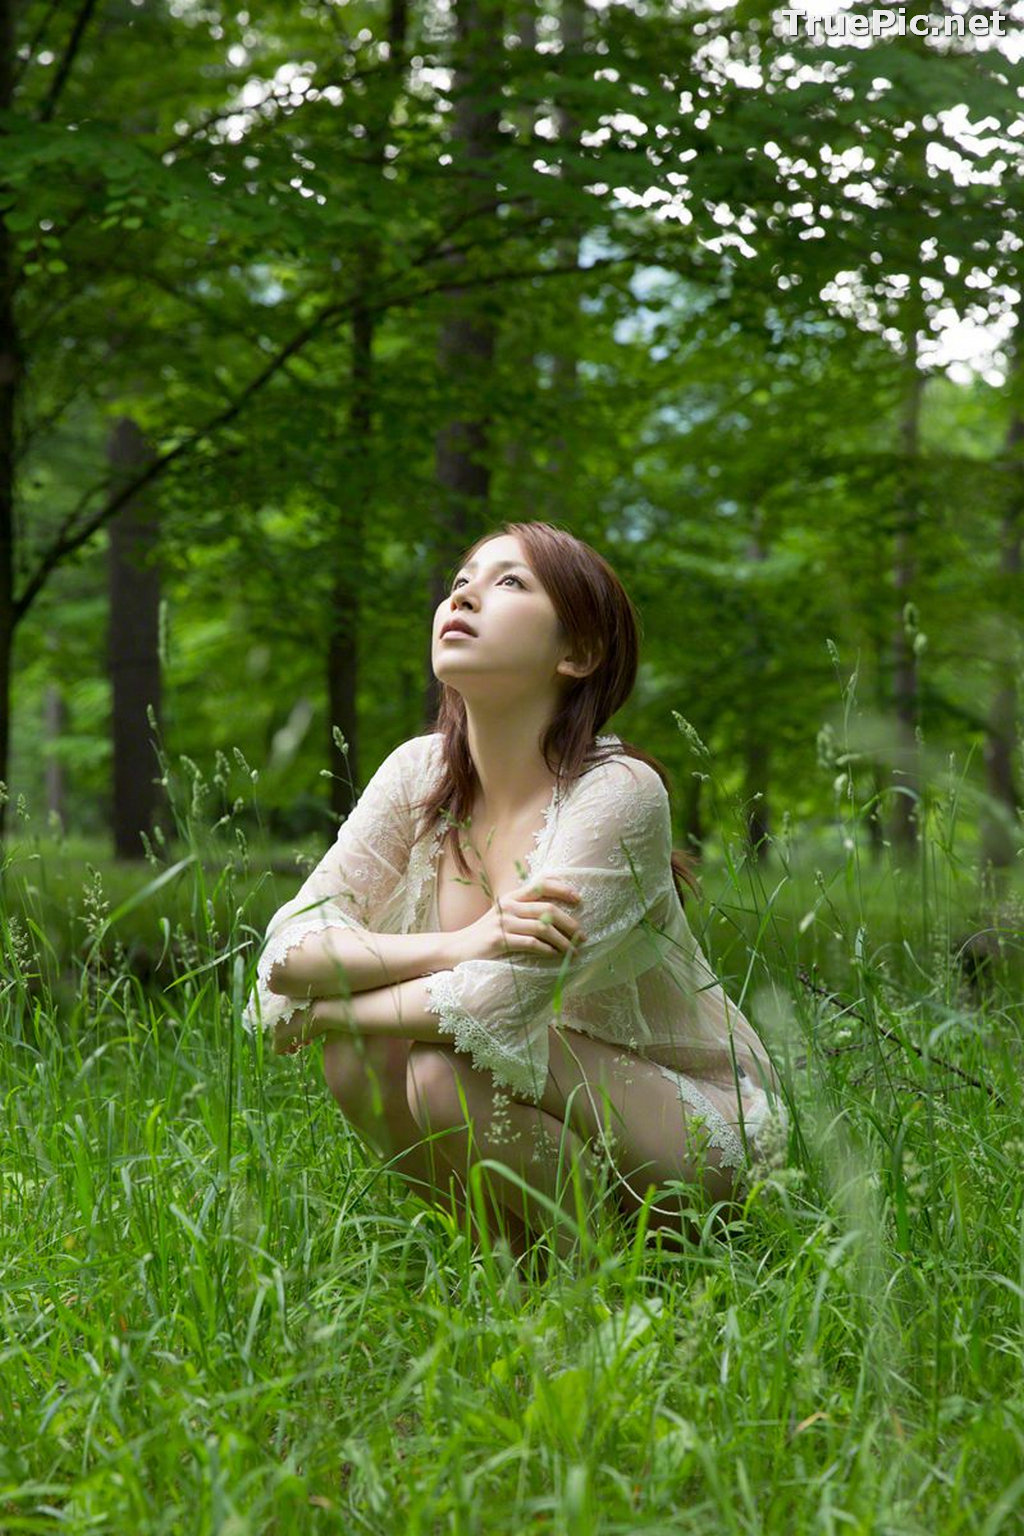 Image [Wanibooks Jacket] No.129 - Japanese Singer and Actress - You Kikkawa - TruePic.net - Picture-88